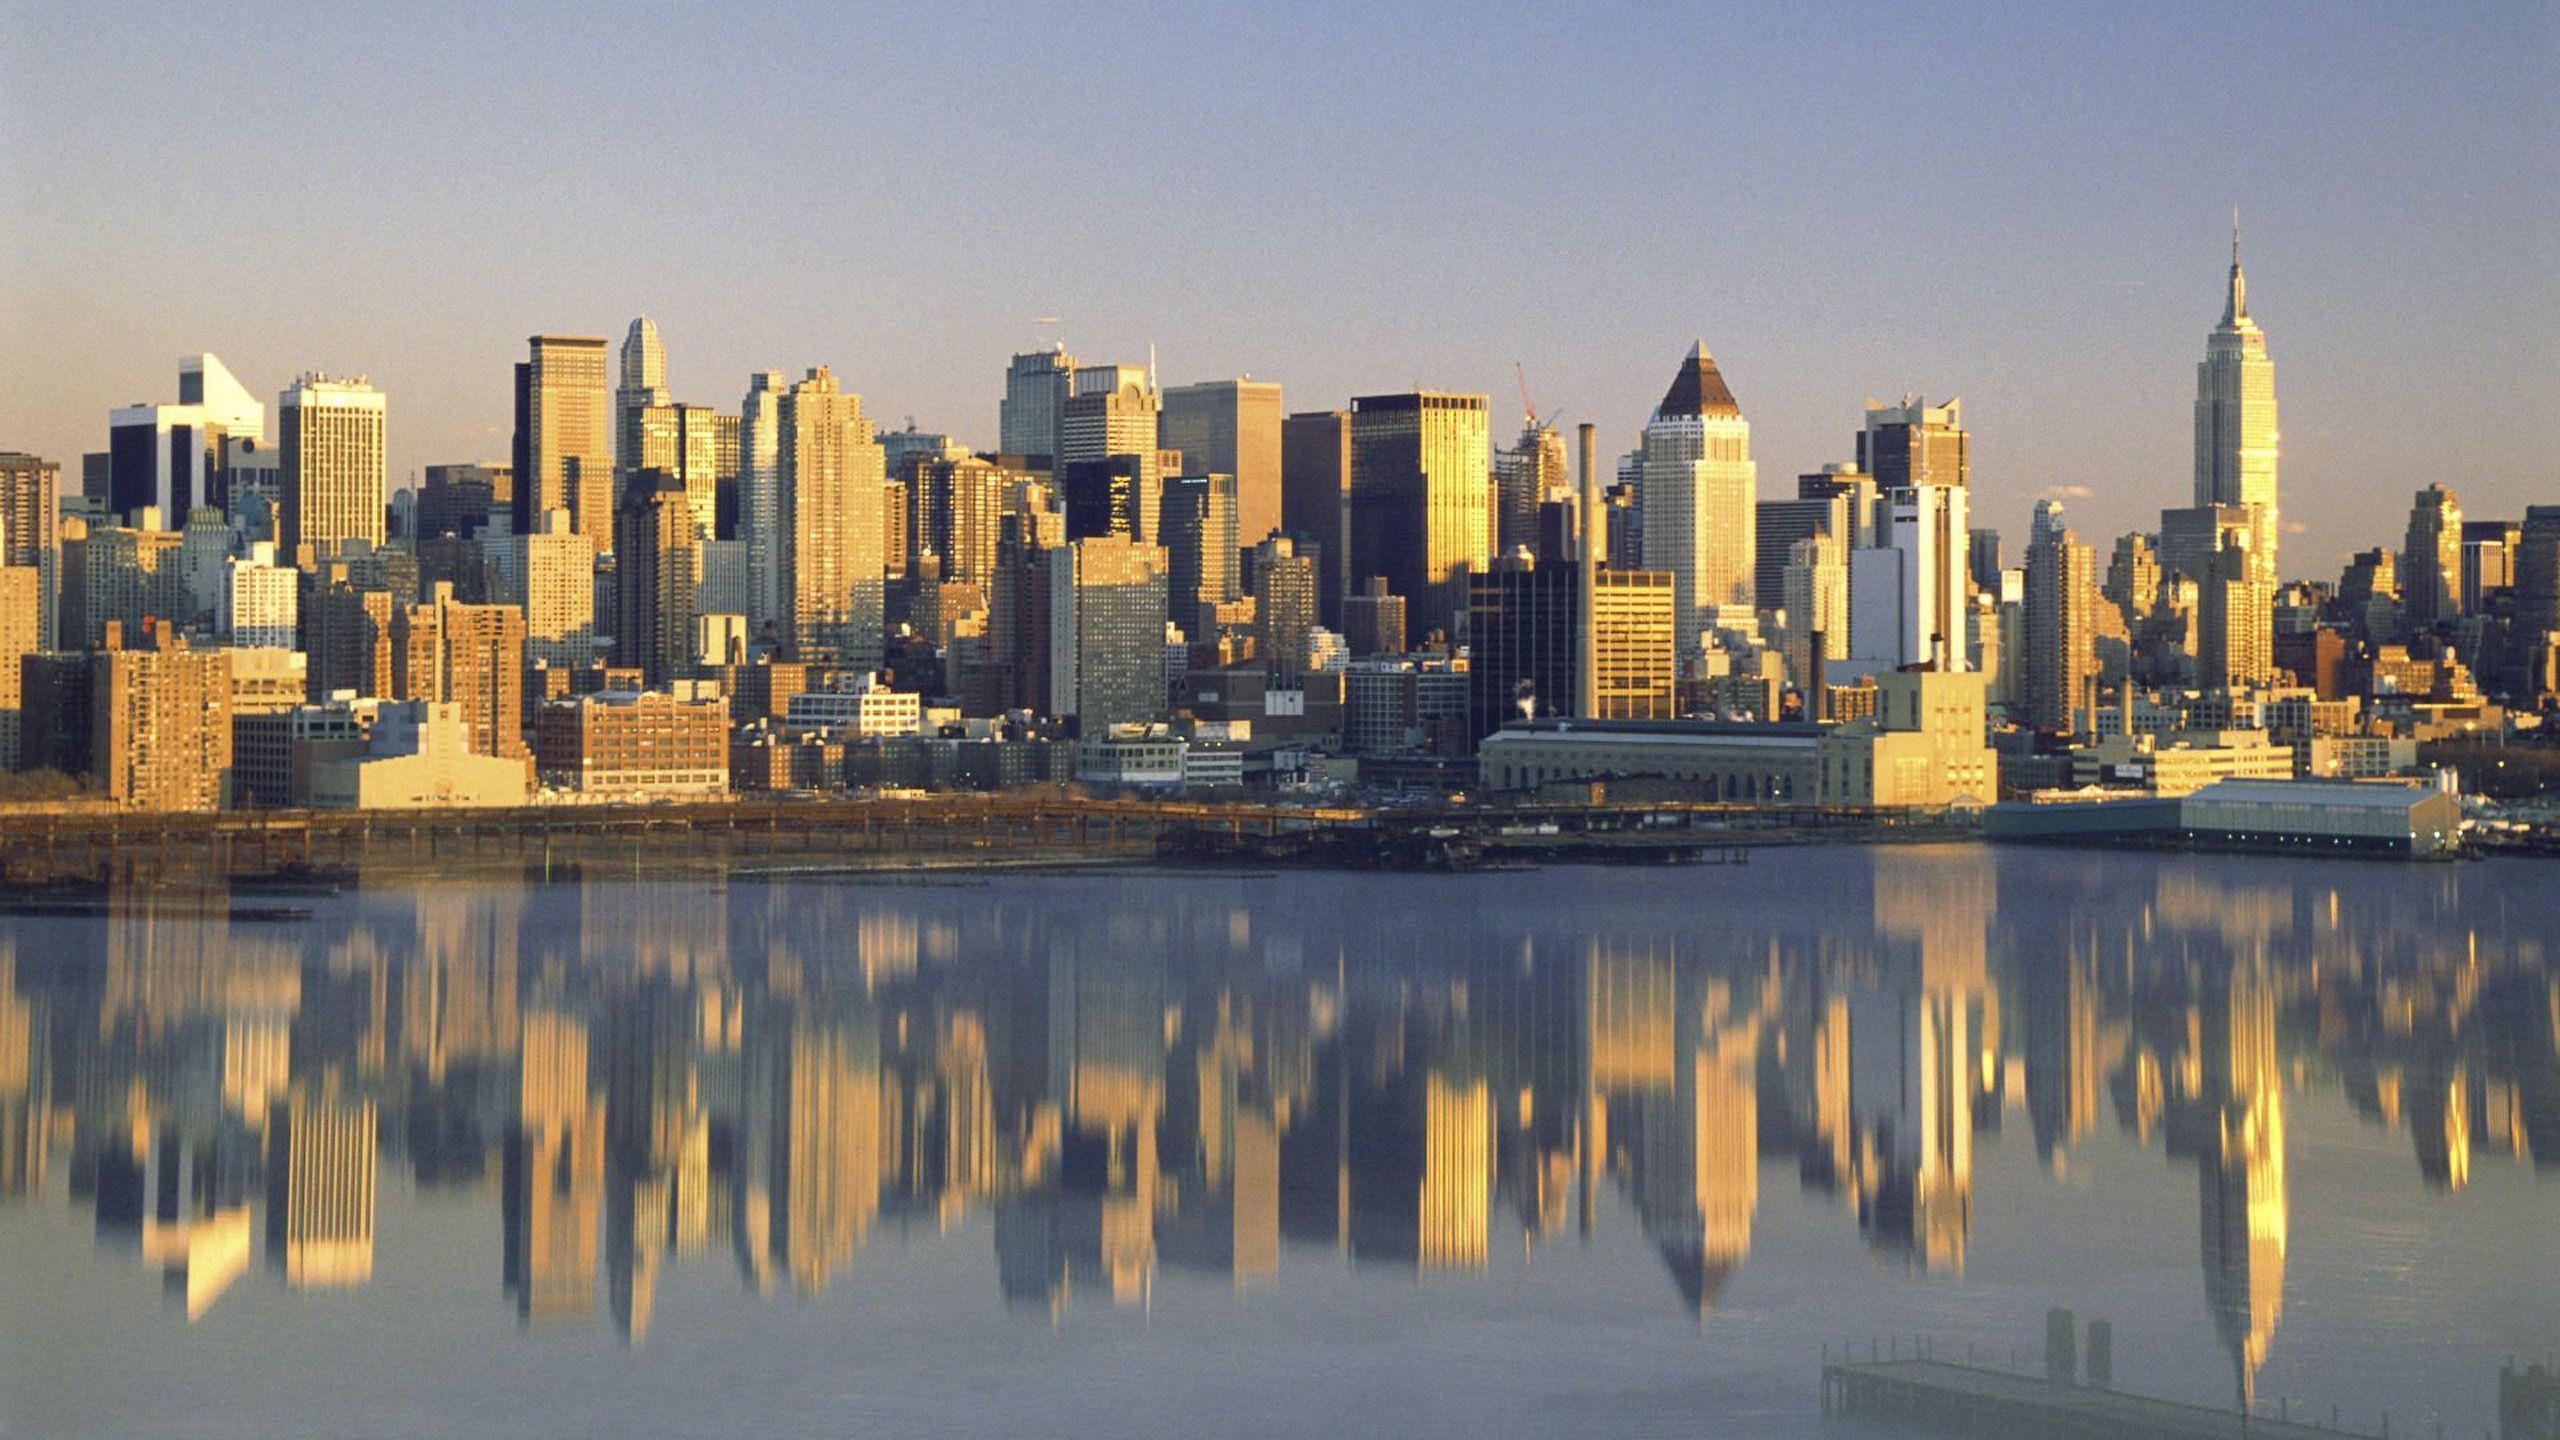 New York City Skyline Wallpaper 2560x1440PX New York Skyline